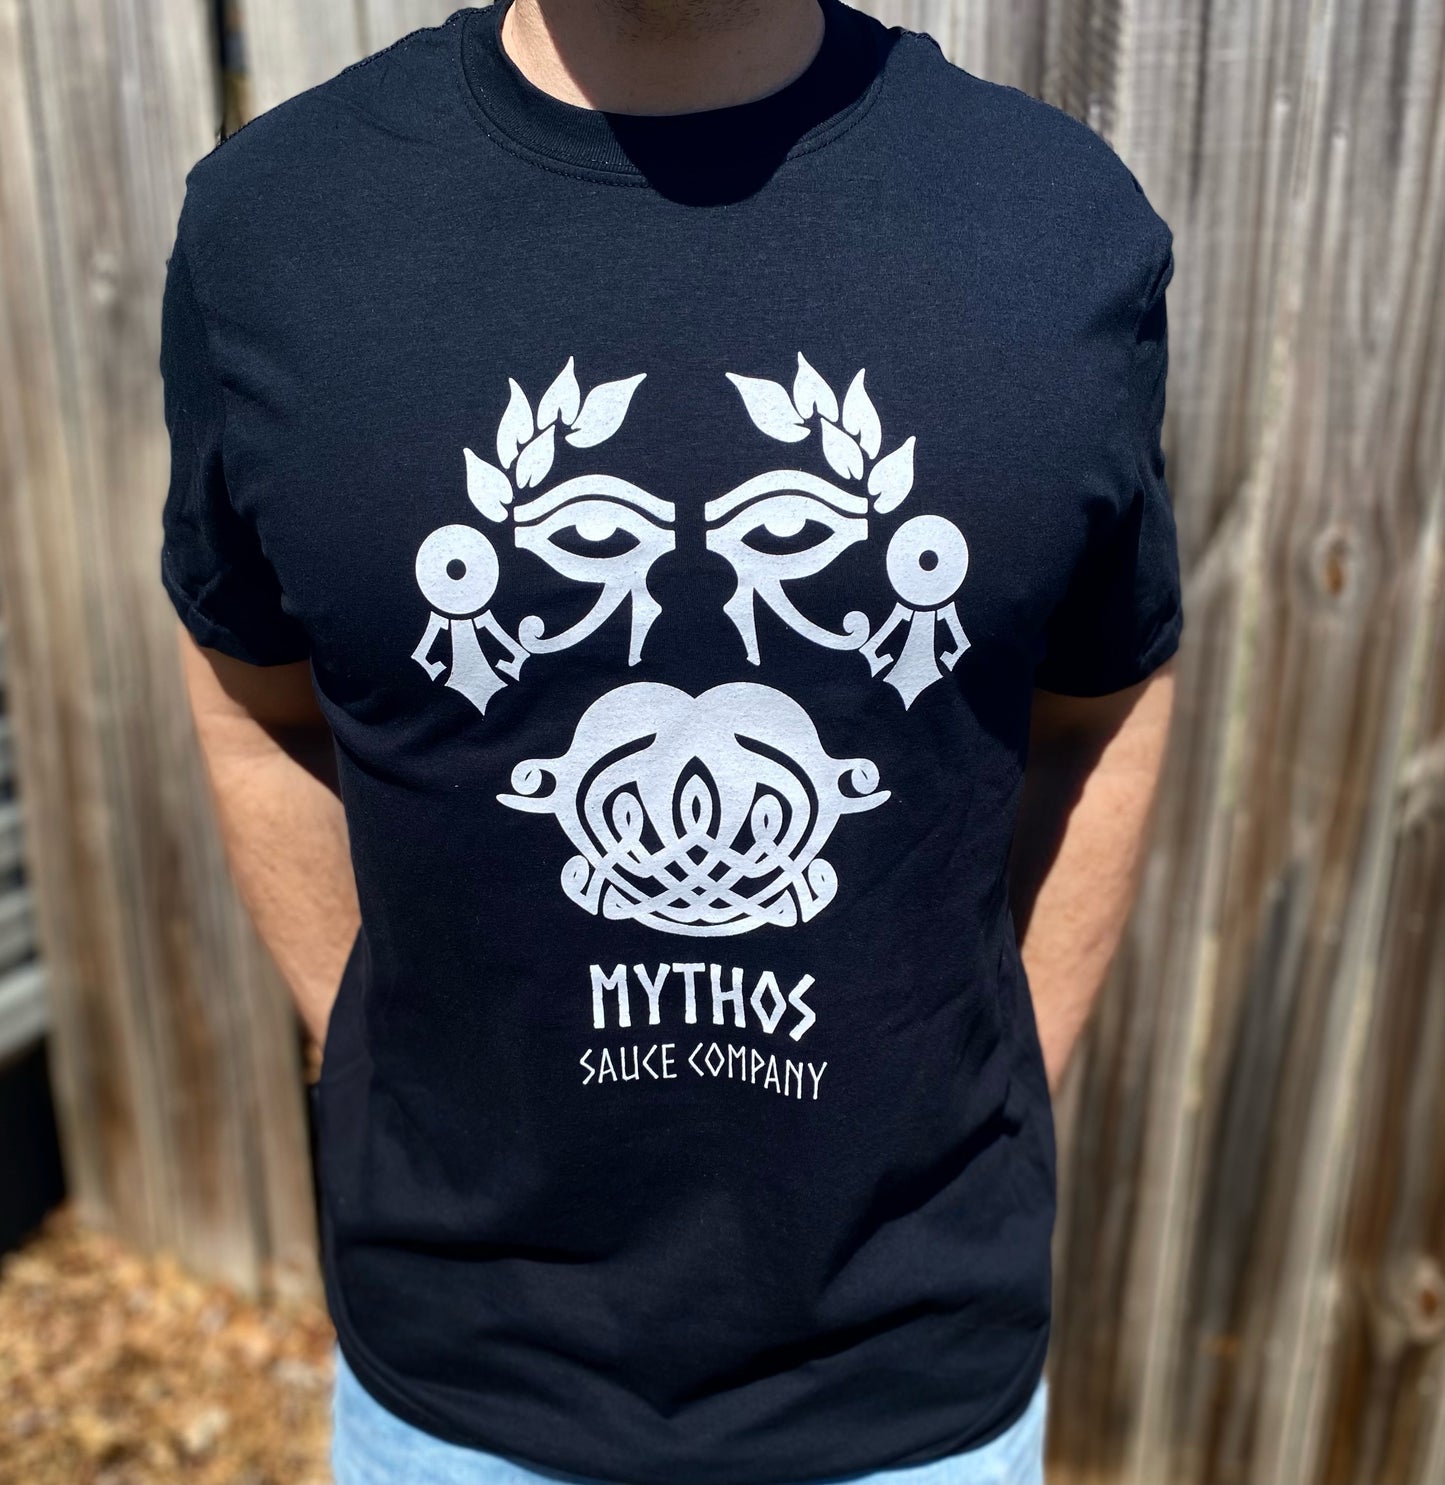 Mythos Logo Shirt - Black & White